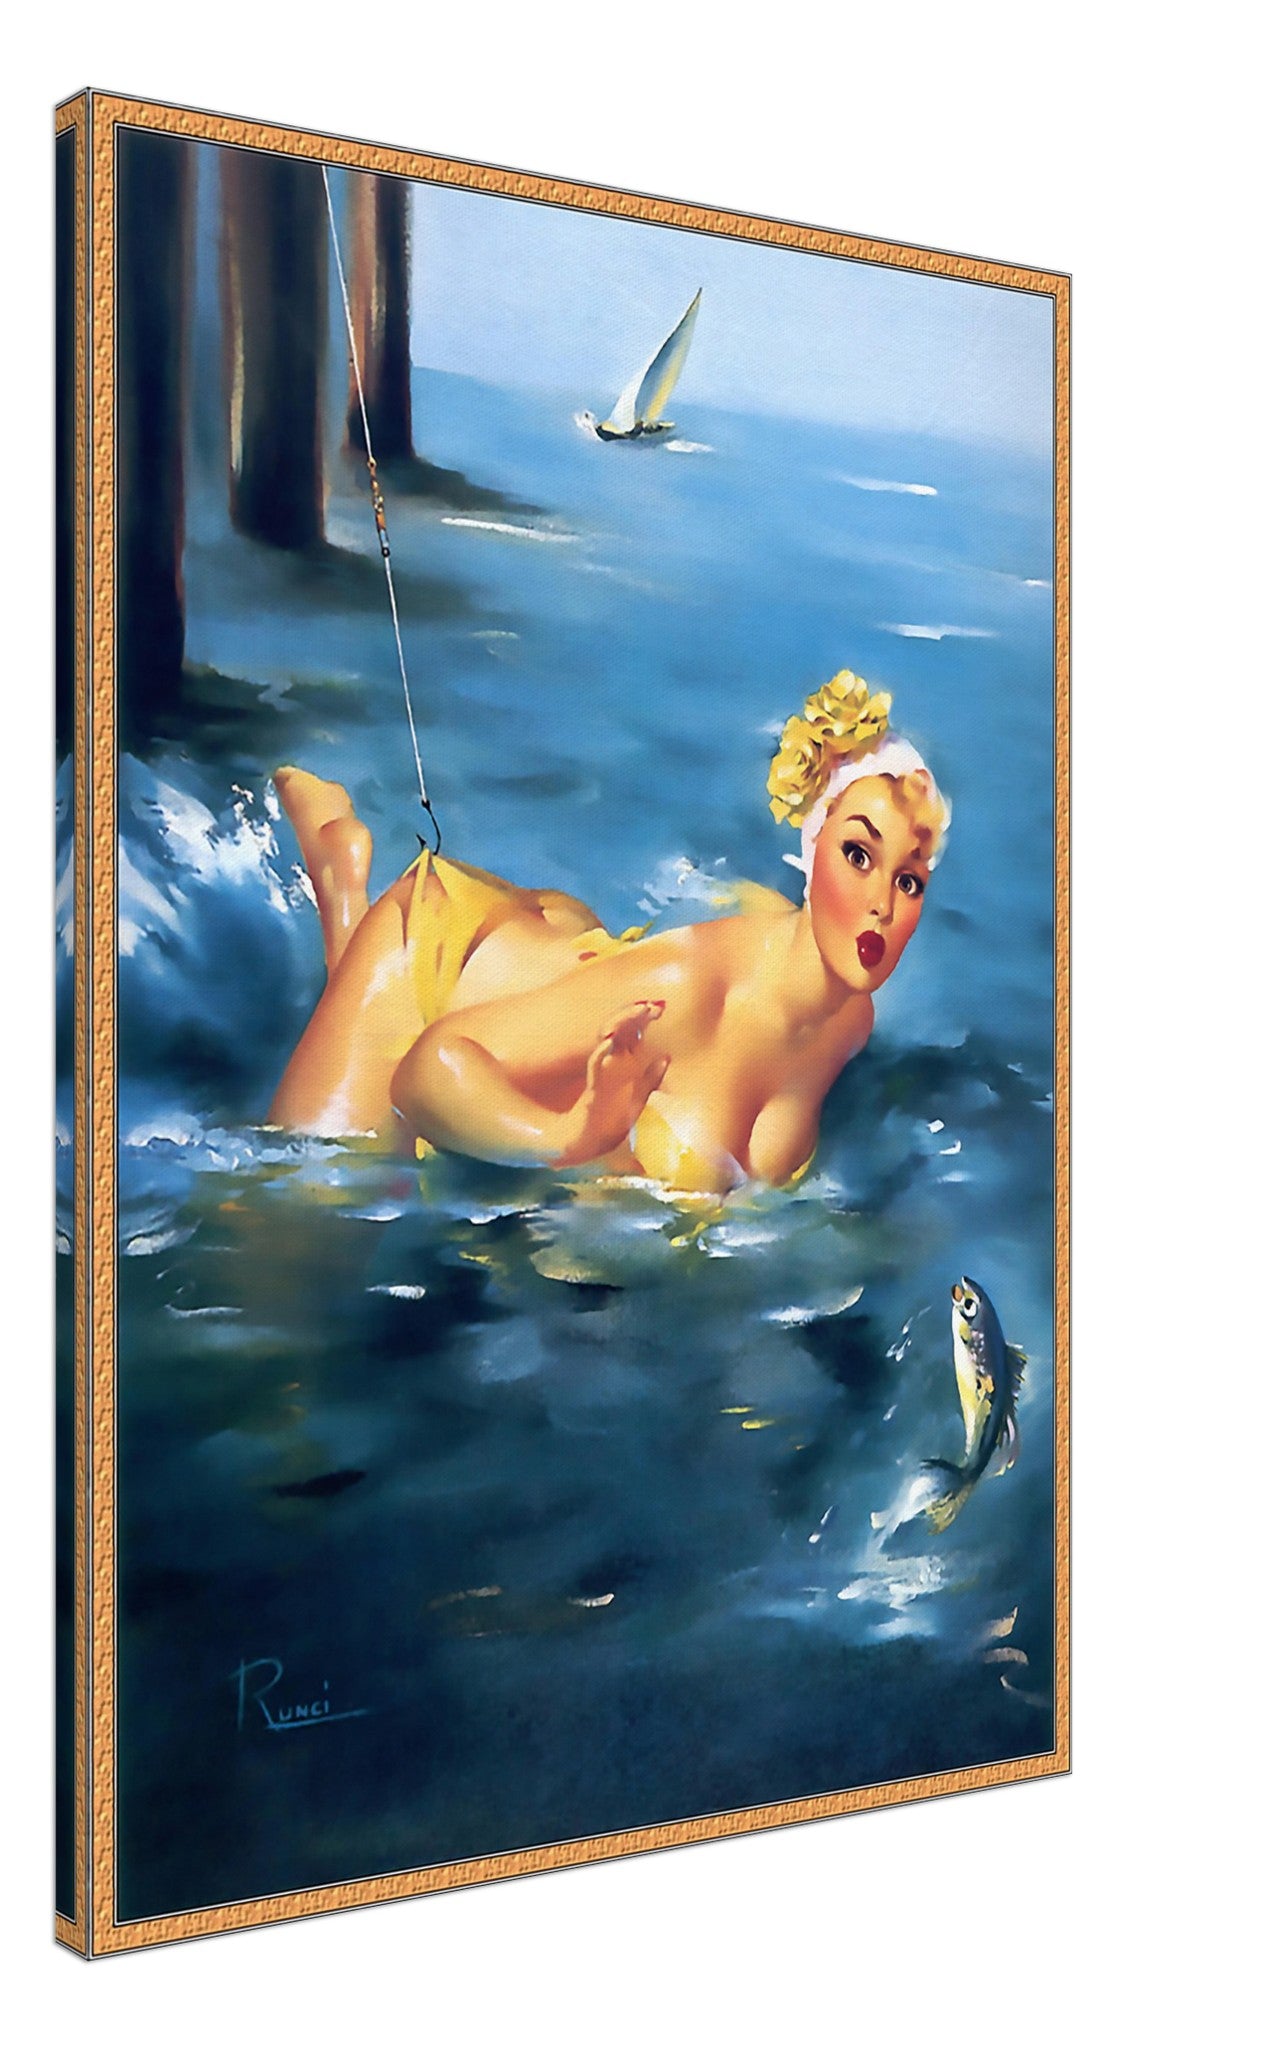 Vintage Pin Up Girl Canvas, Yellow Bikini, Edward Runci - Vintage Art - Retro Pin Up Girl Canvas Print - Late 1940'S - 1950'S